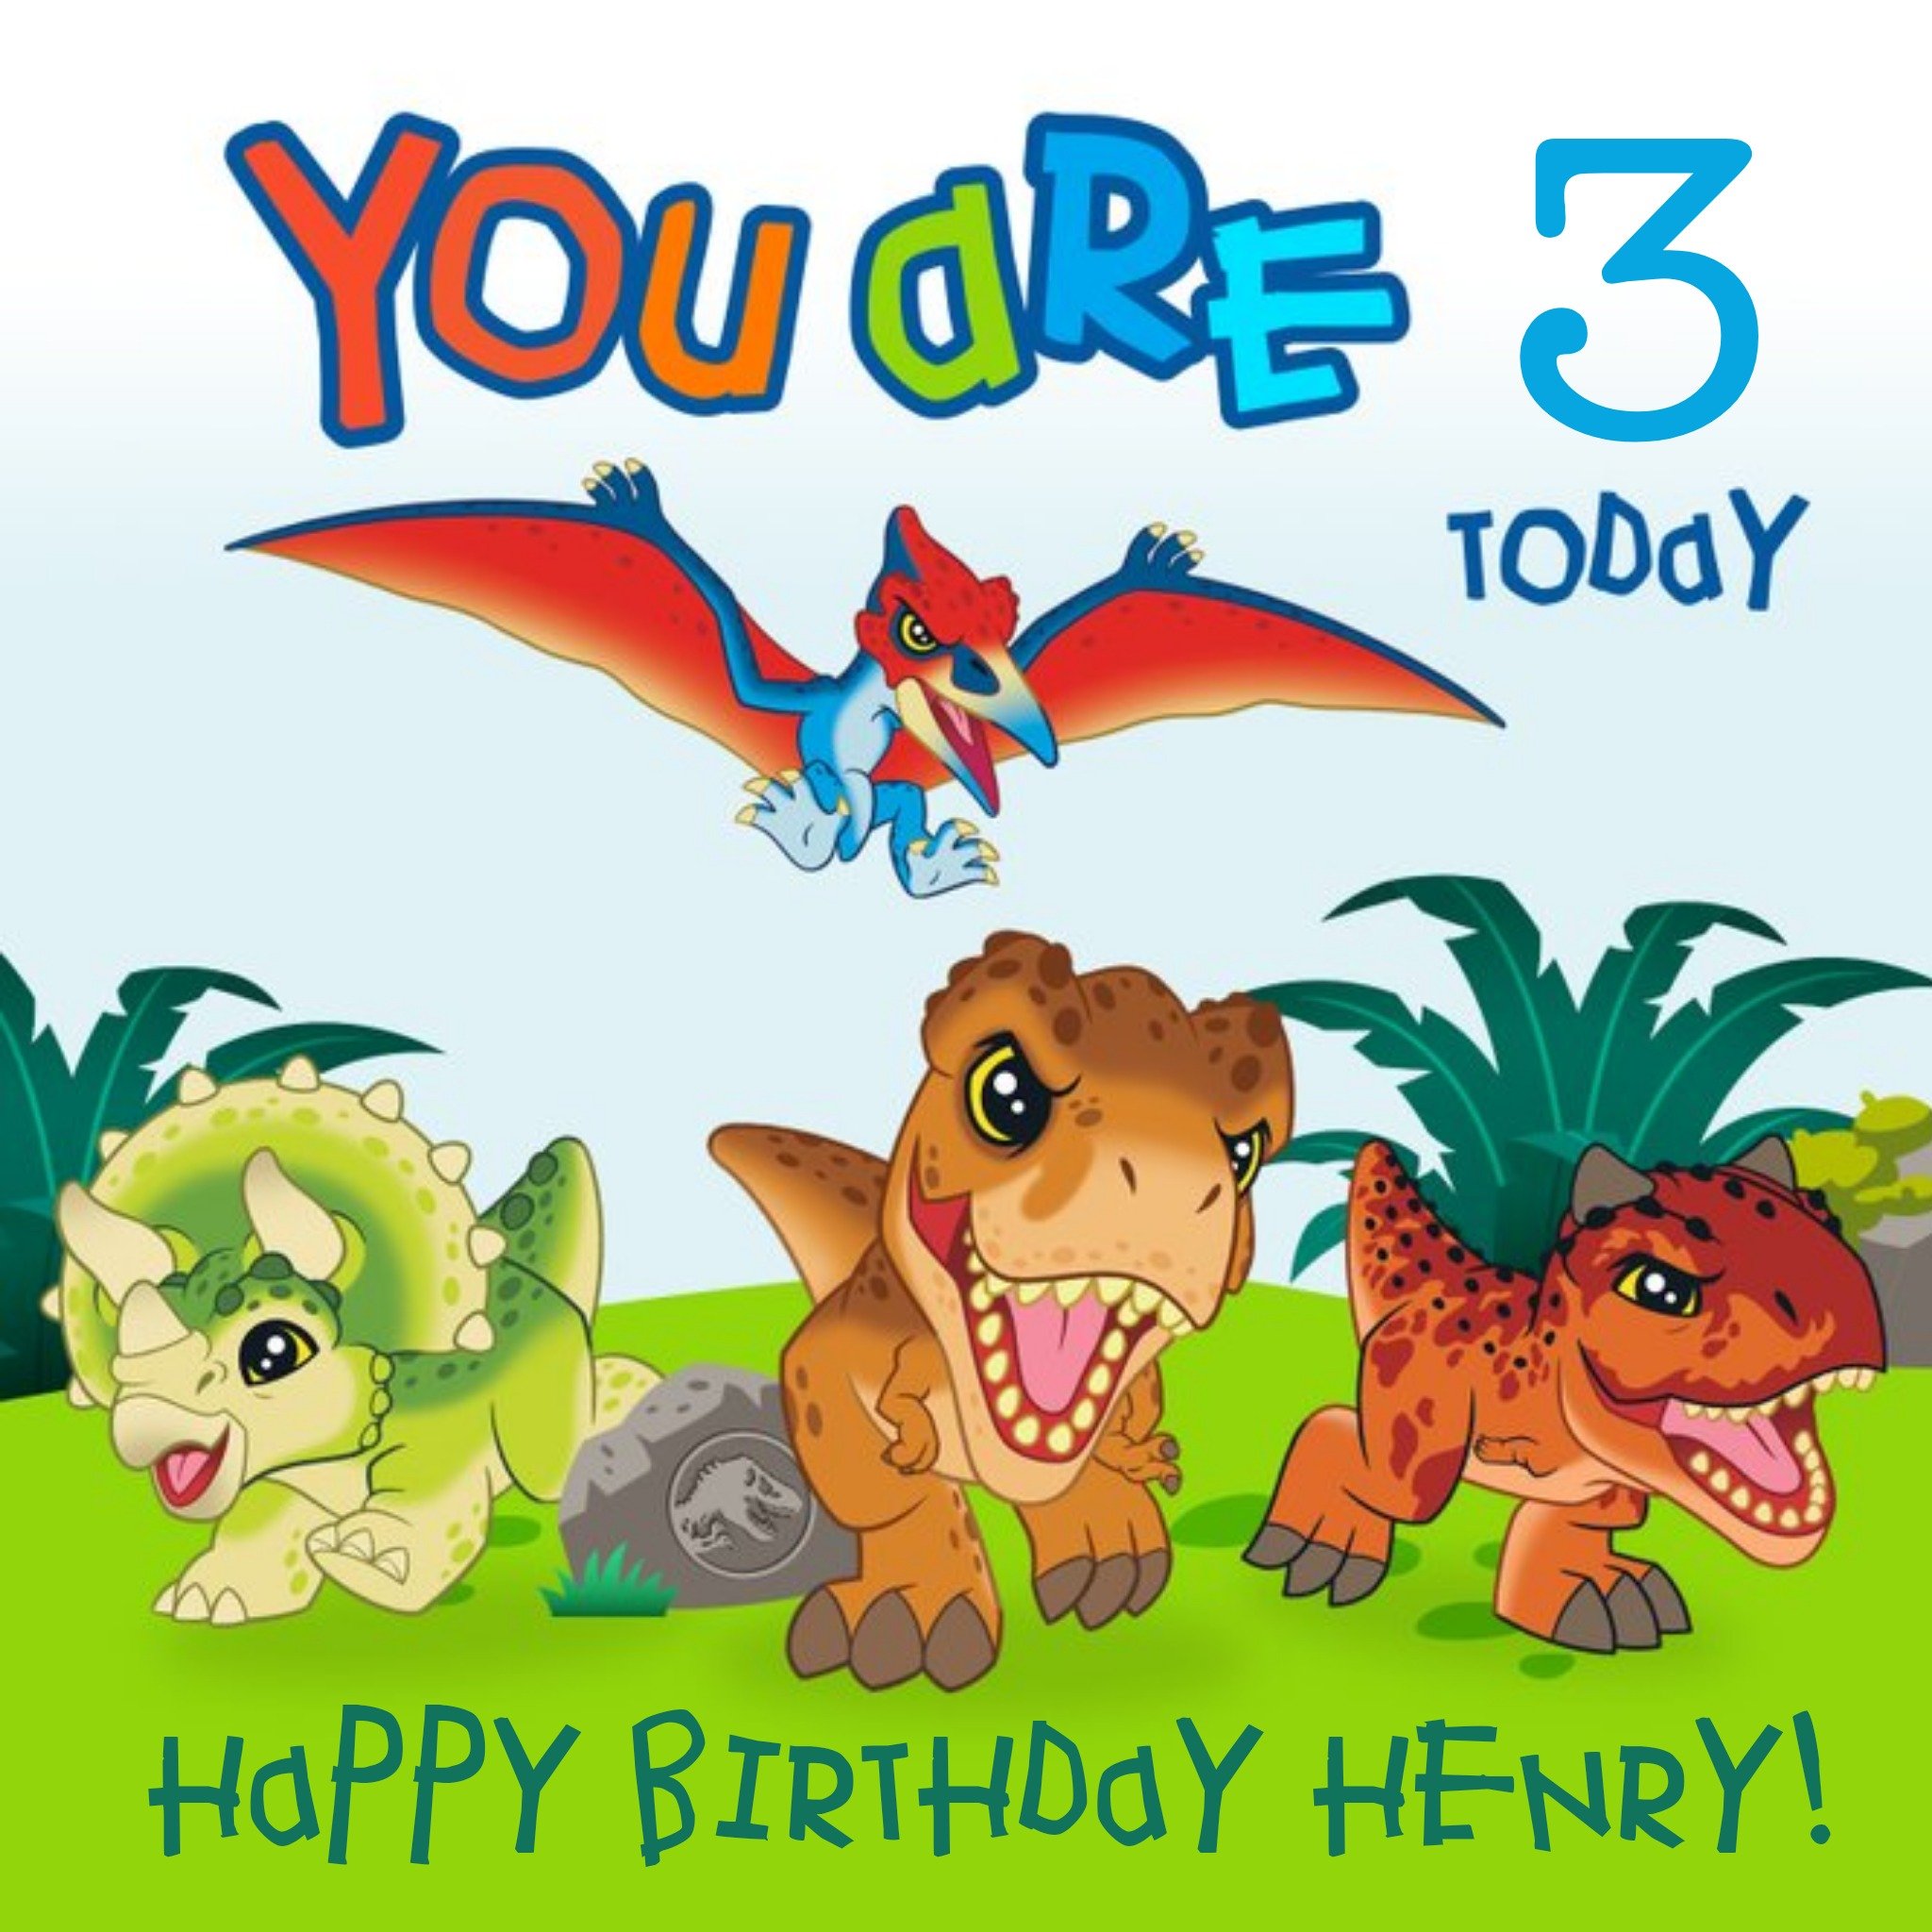 Jurassic Park Cute Cartoon Dinosaurs 3 Today Birthday Card, Large